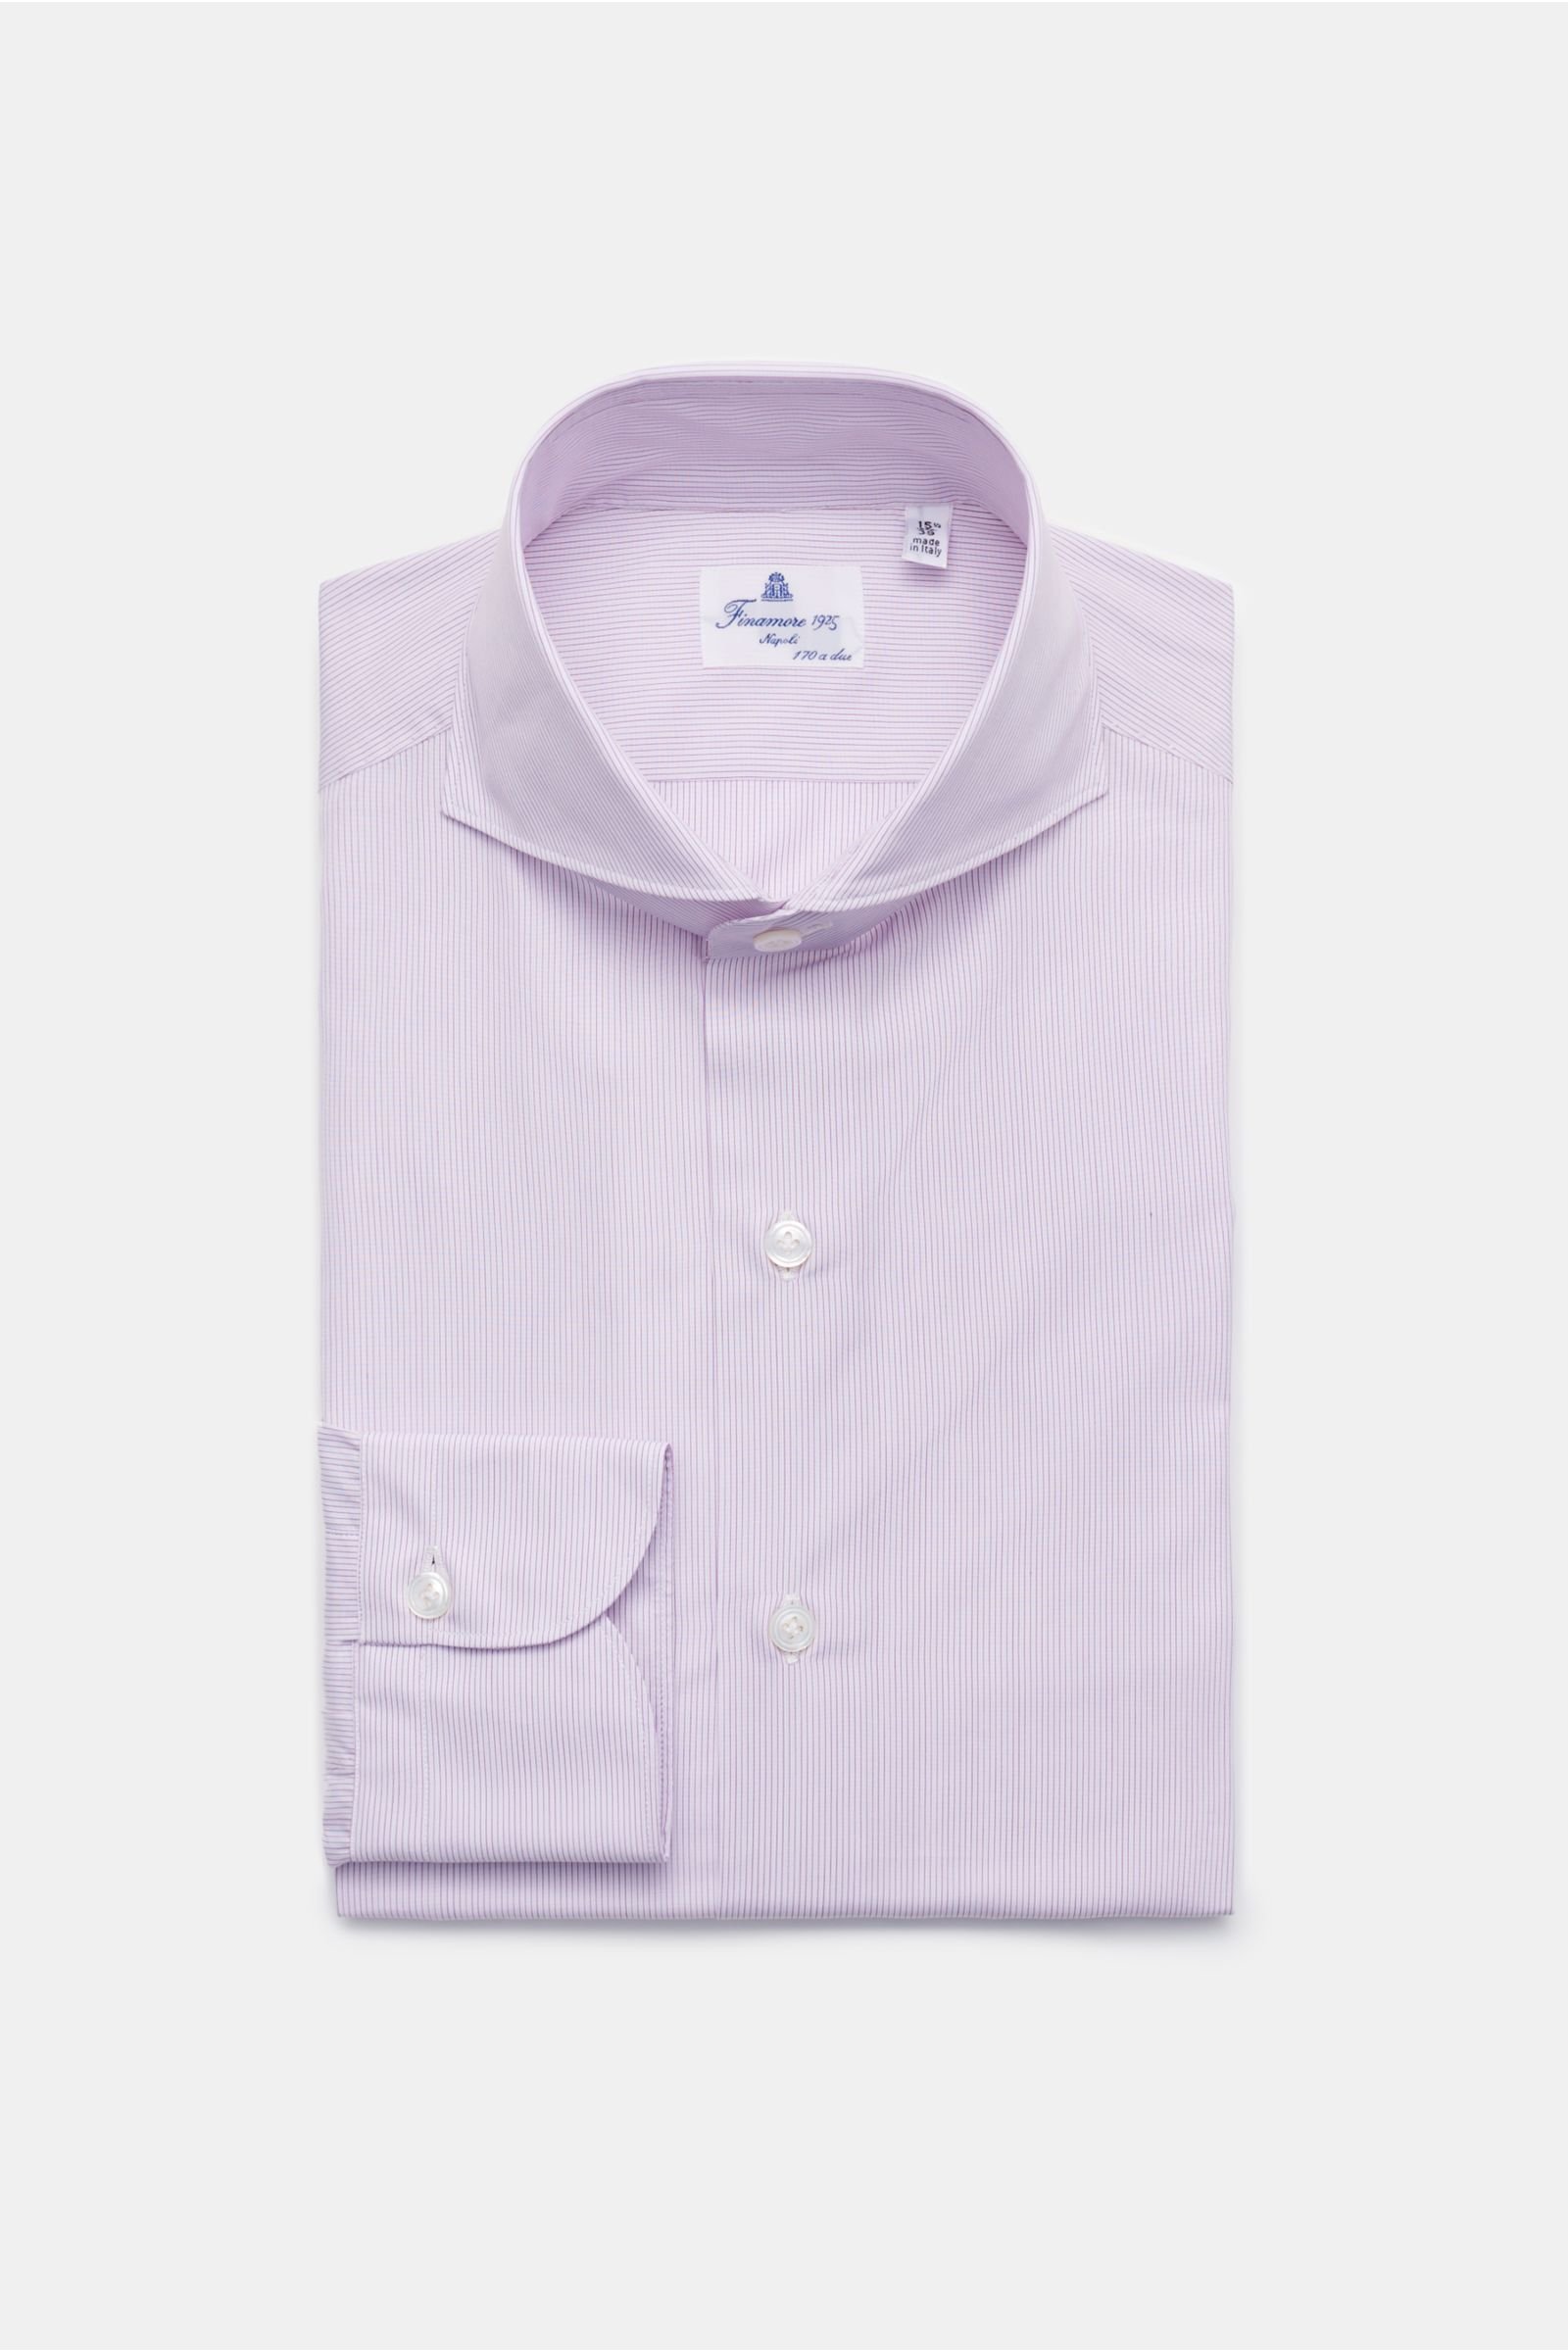 Business shirt 'Sergio Milano' shark collar burgundy/white striped